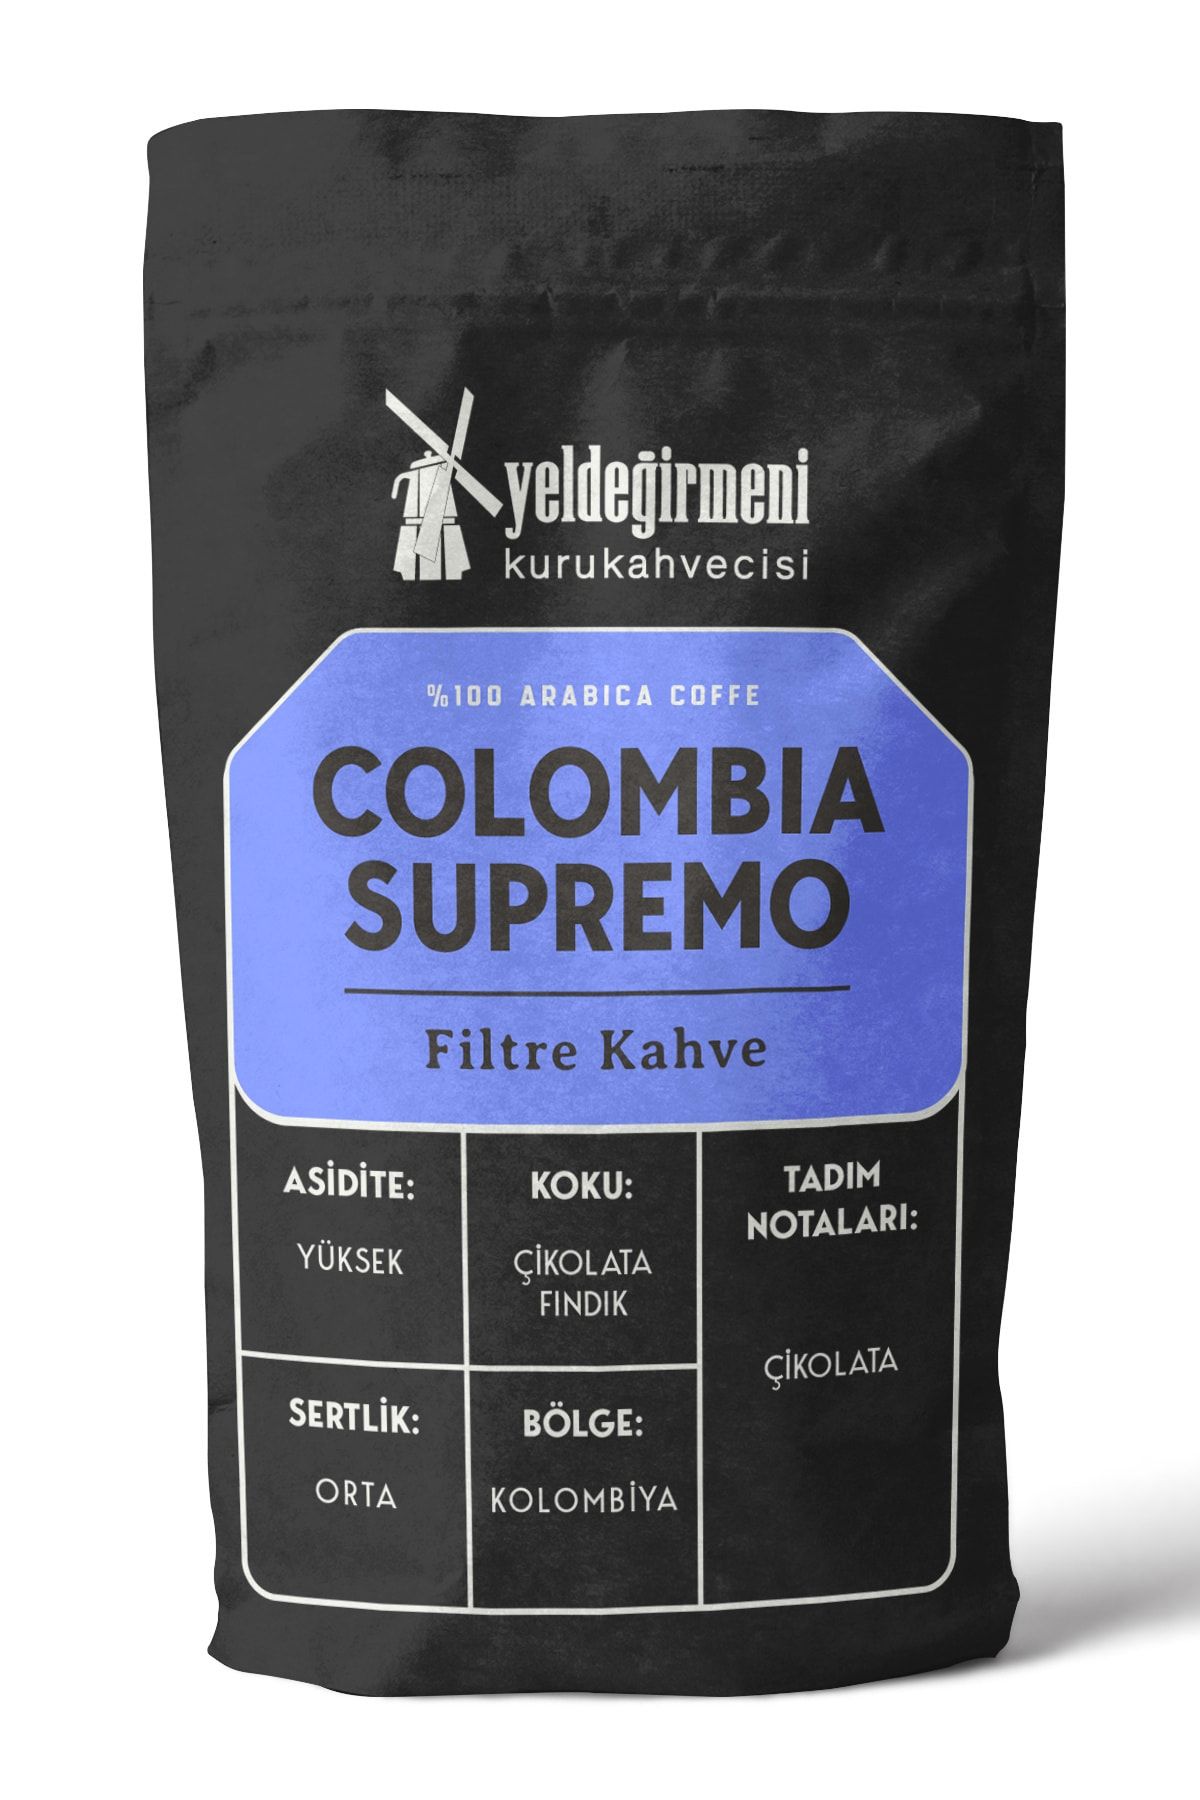 Yeldeğirmeni Kurukahvecisi Colombia Supremo Filtre Kahve 500 gr